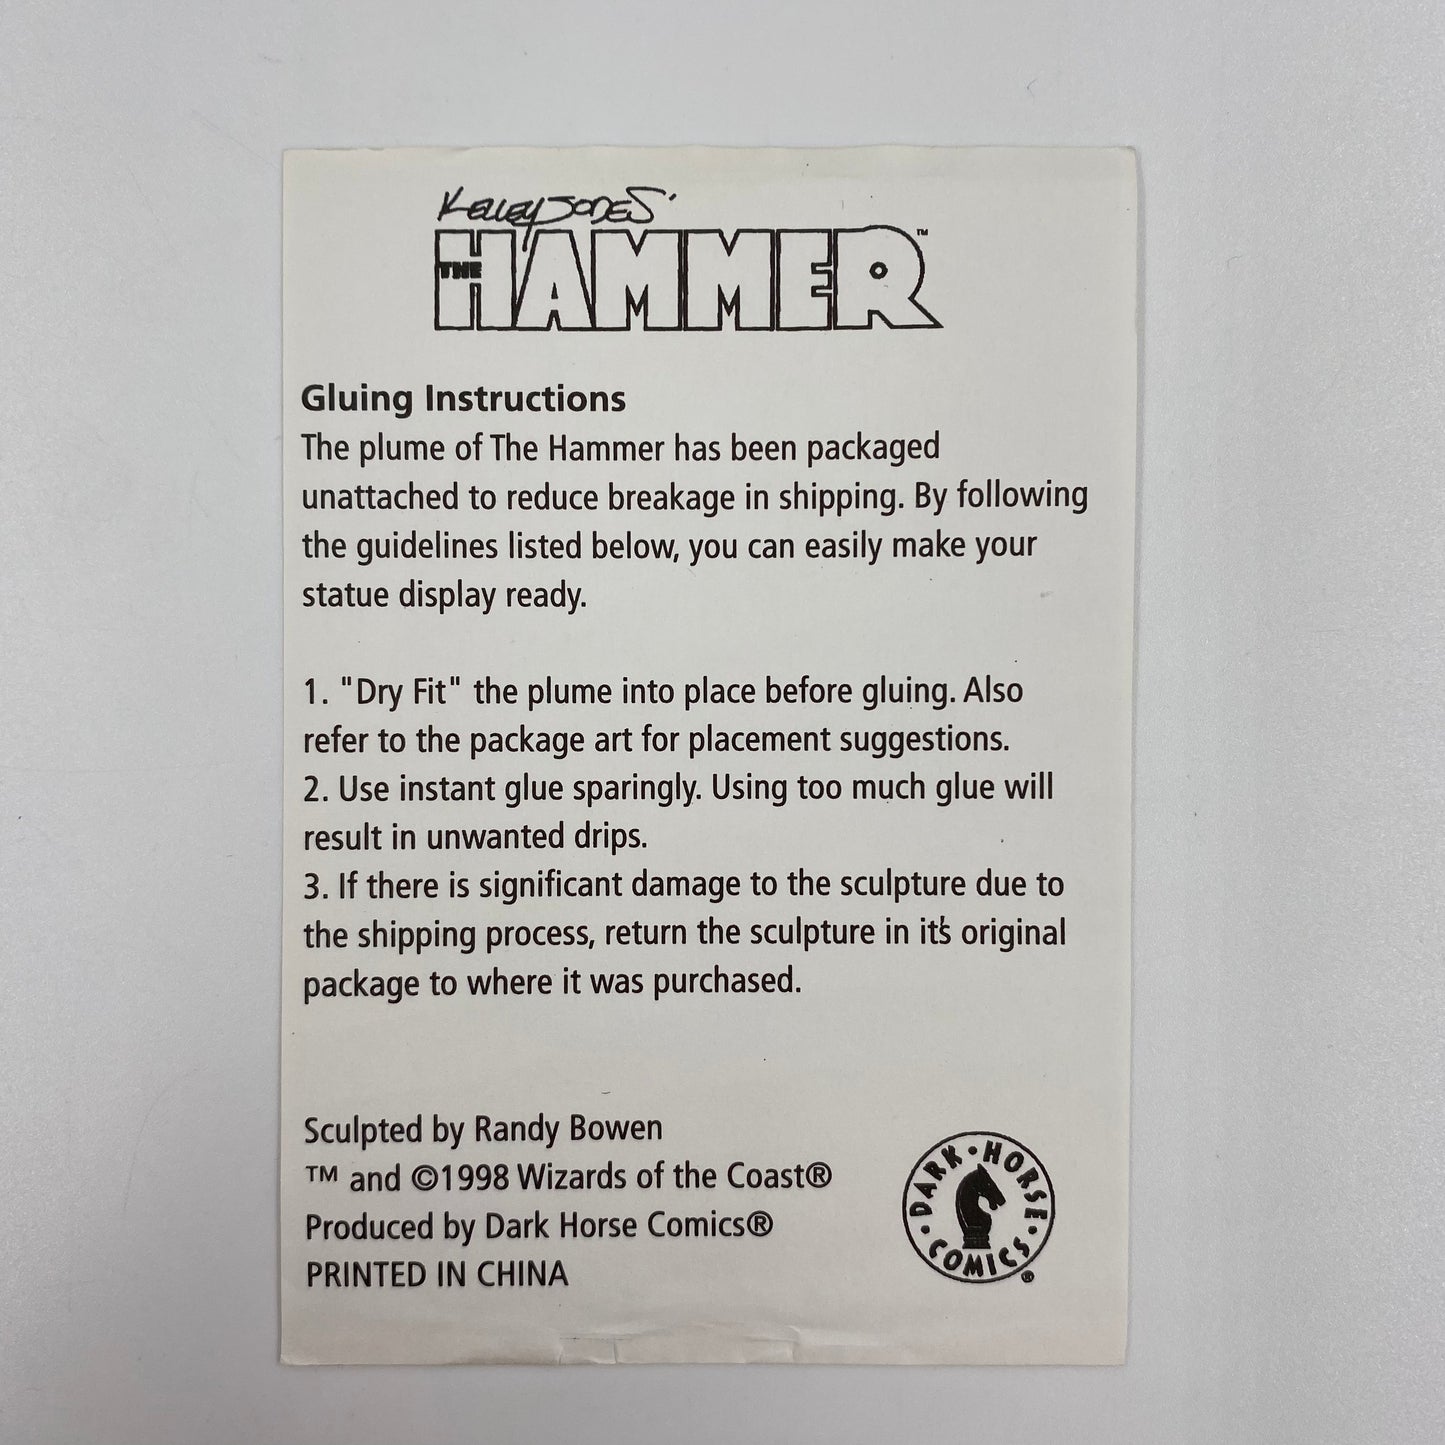 The Hammer mini-bust (1999) Bowen Designs